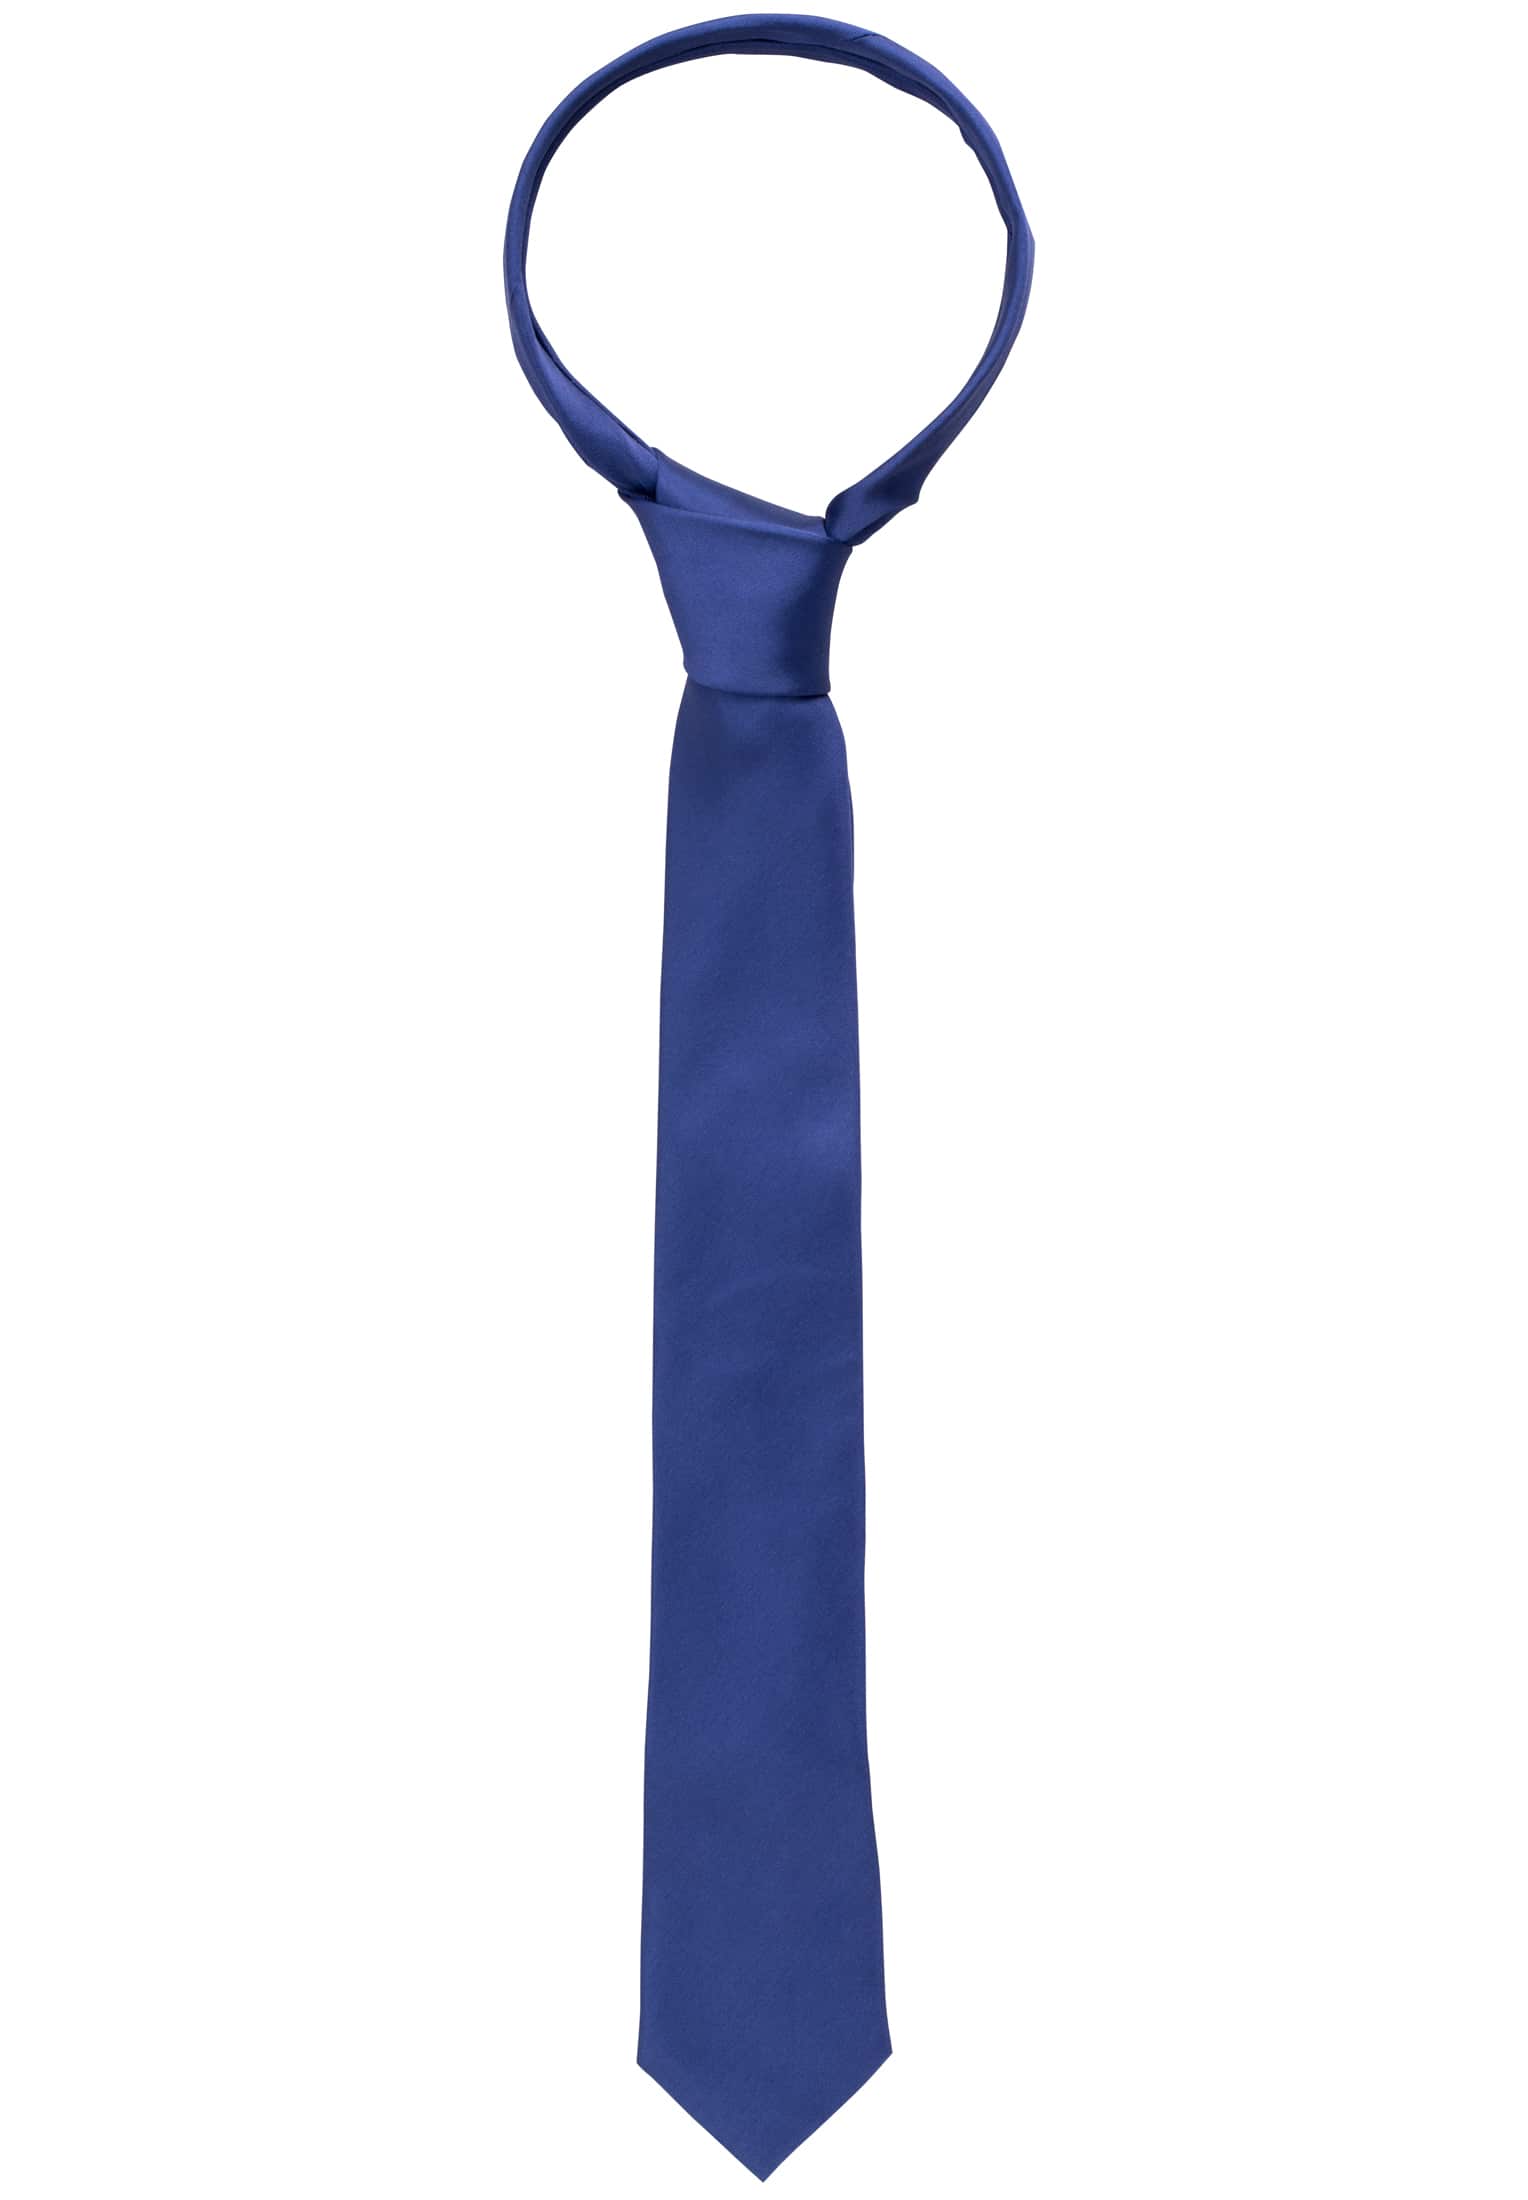 Krawatte in | 142 | unifarben indigo indigo 1AC00025-01-92-142 